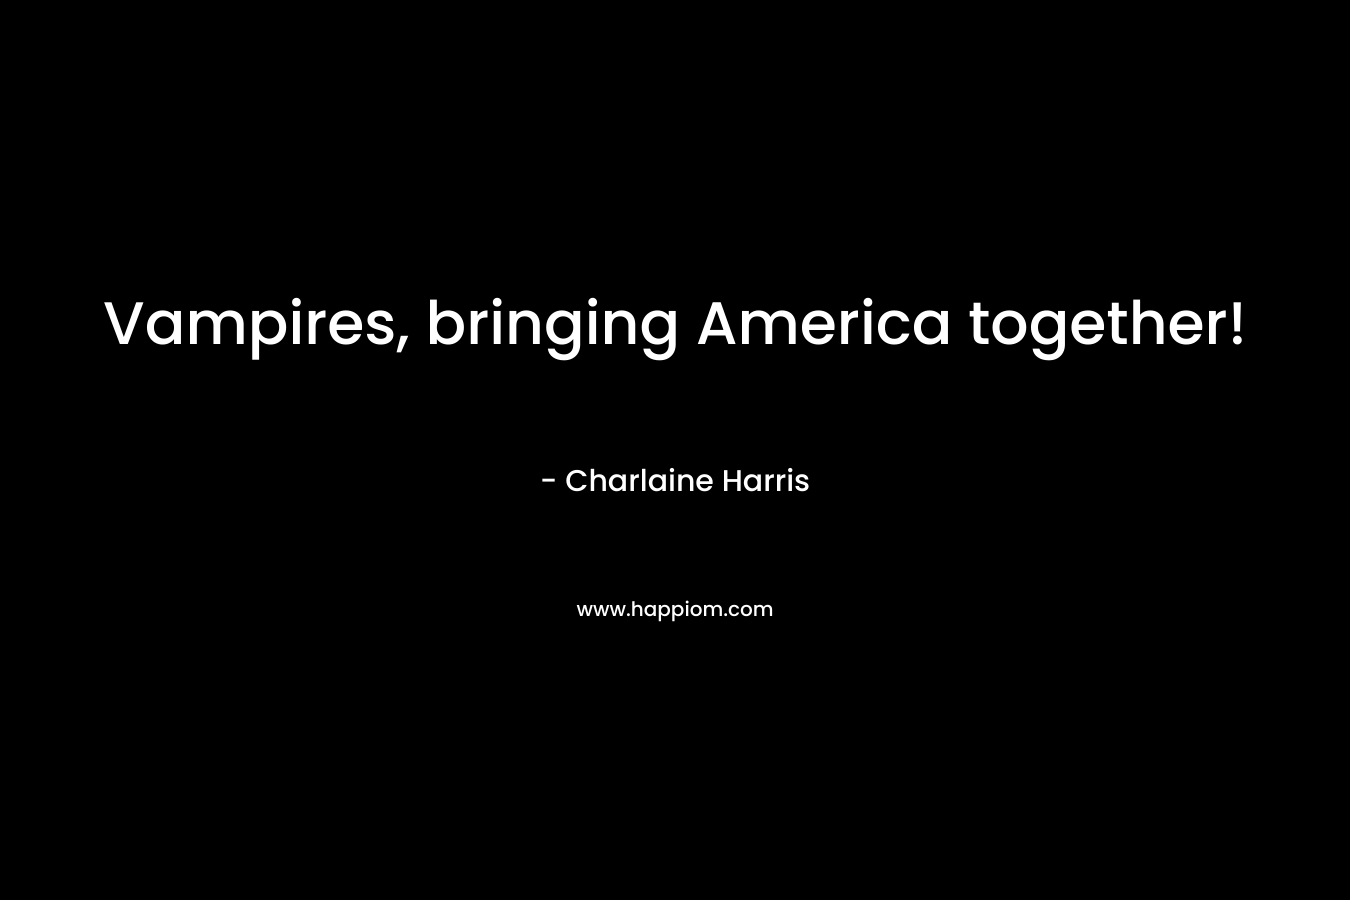 Vampires, bringing America together!